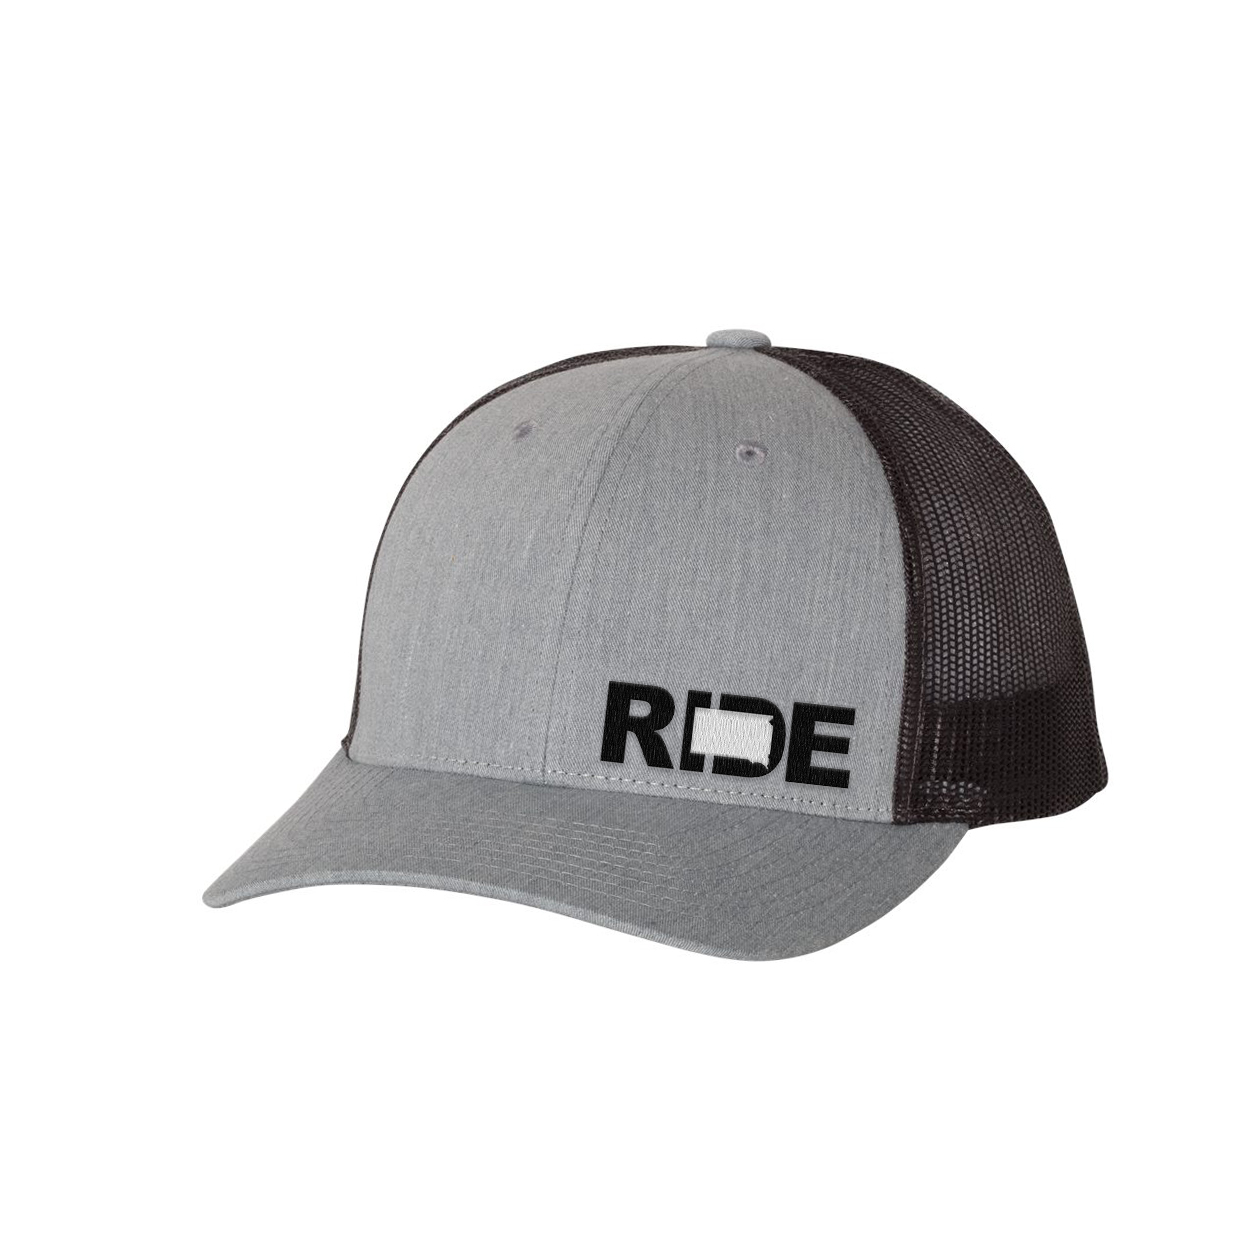 Ride South Dakota Night Out Pro Embroidered Snapback Trucker Hat Heather Gray/Black